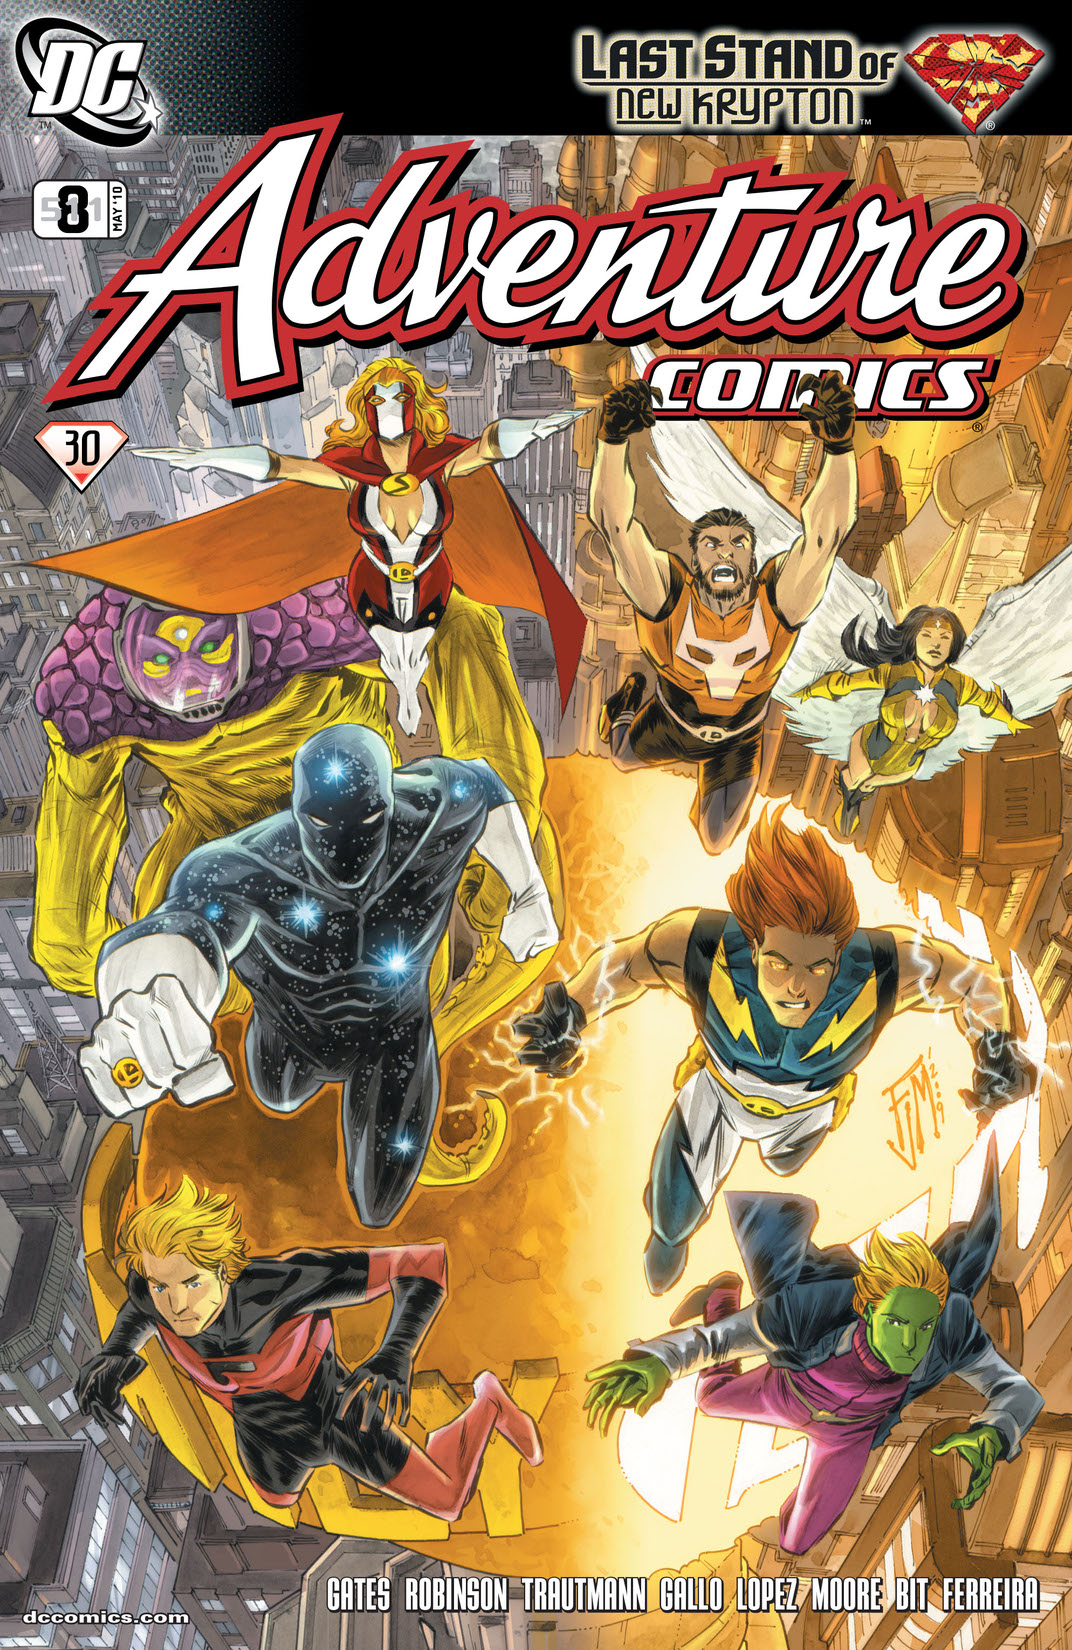 Adventure Comics (2009-) #8 preview images